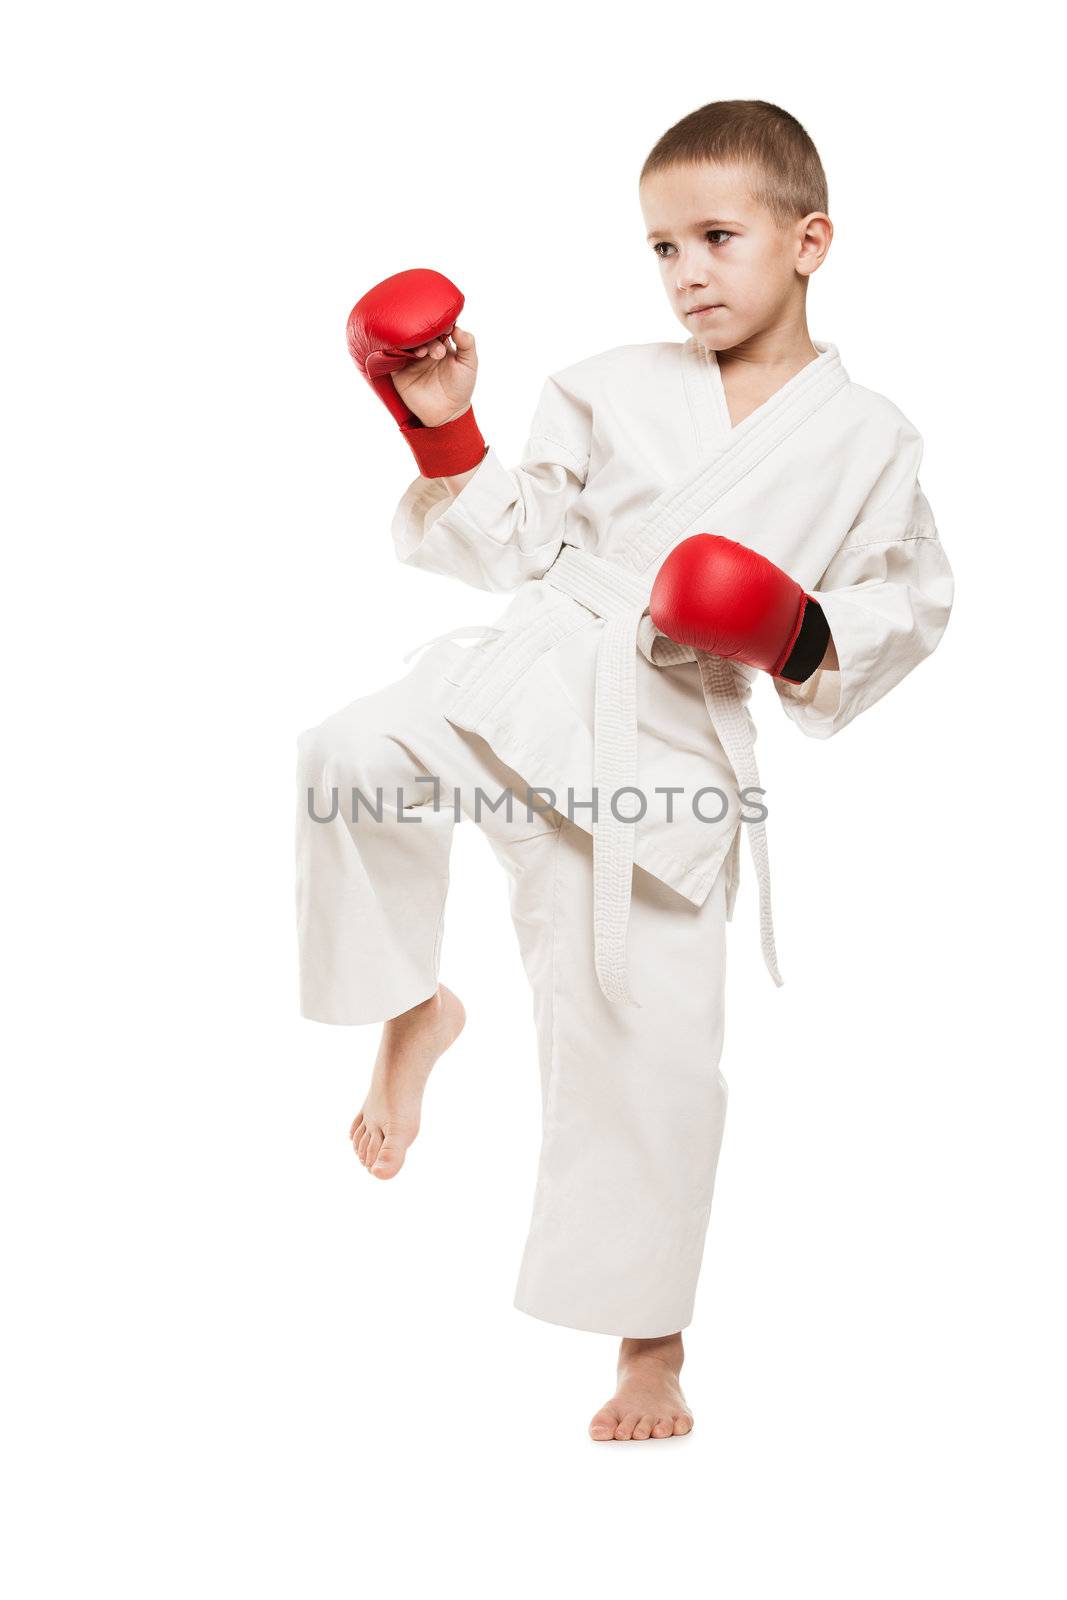 Martial art sport - child boy in white kimono training karate punch or kick